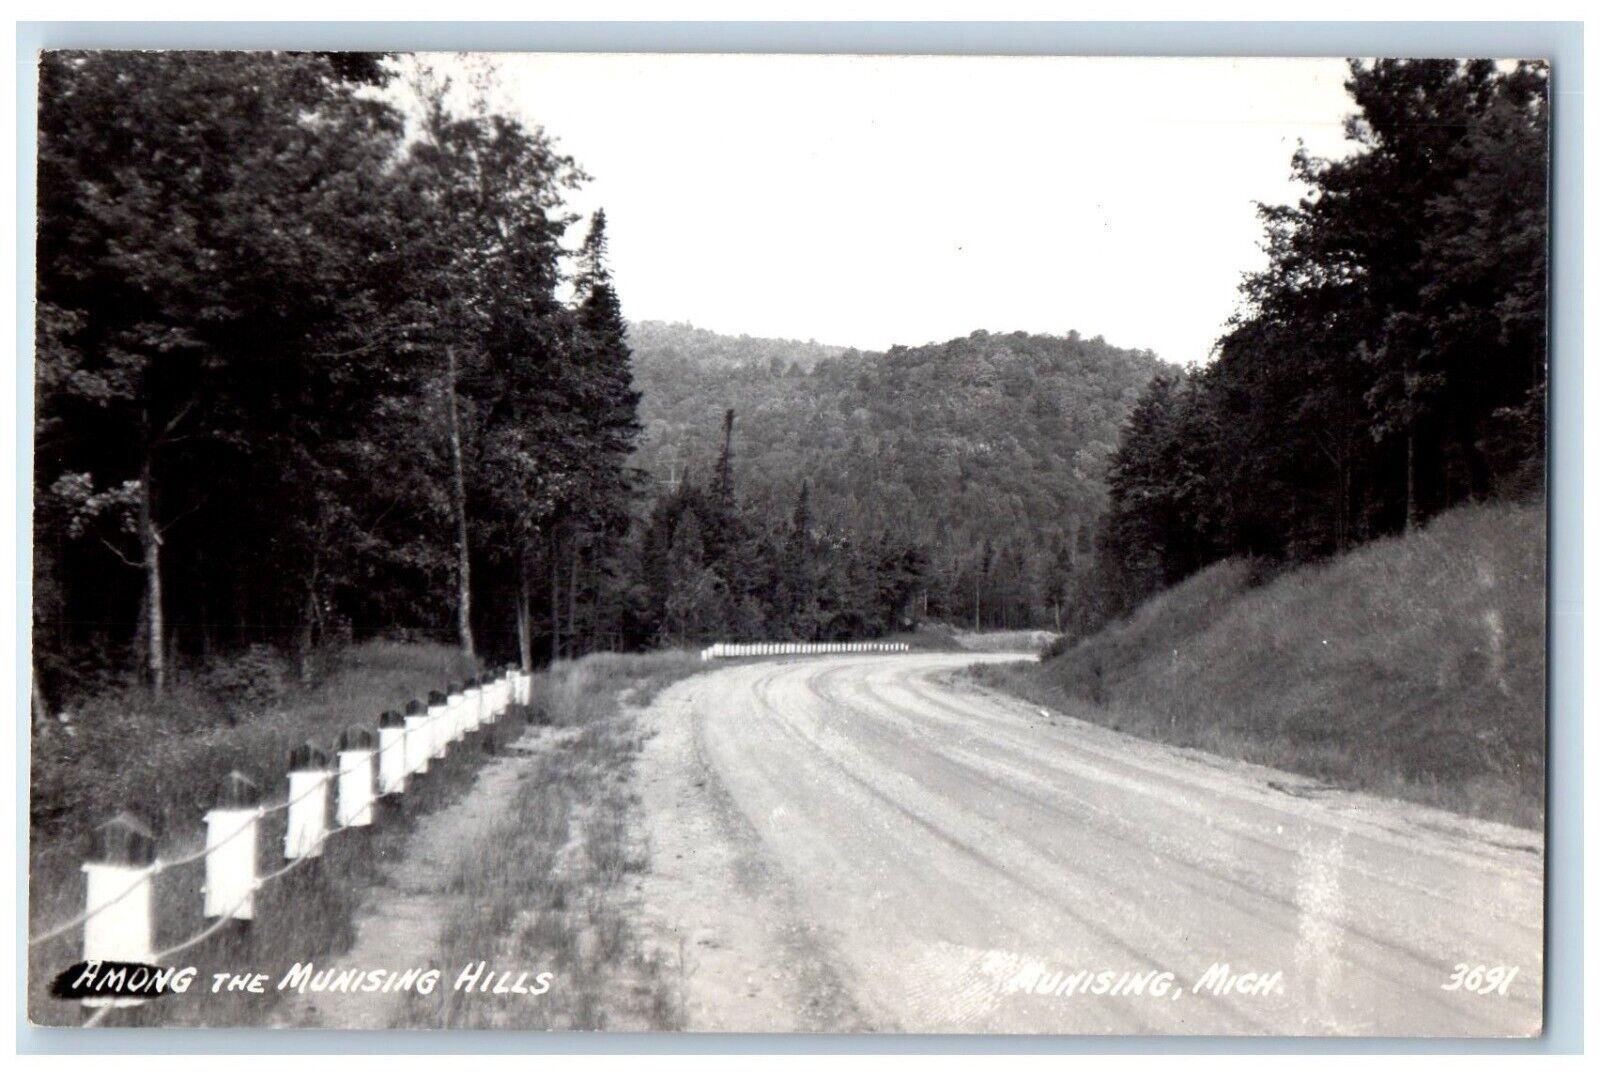 Munising Michigan MI Postcard RPPC Photo Among The Munising Hills c1940s Vintage